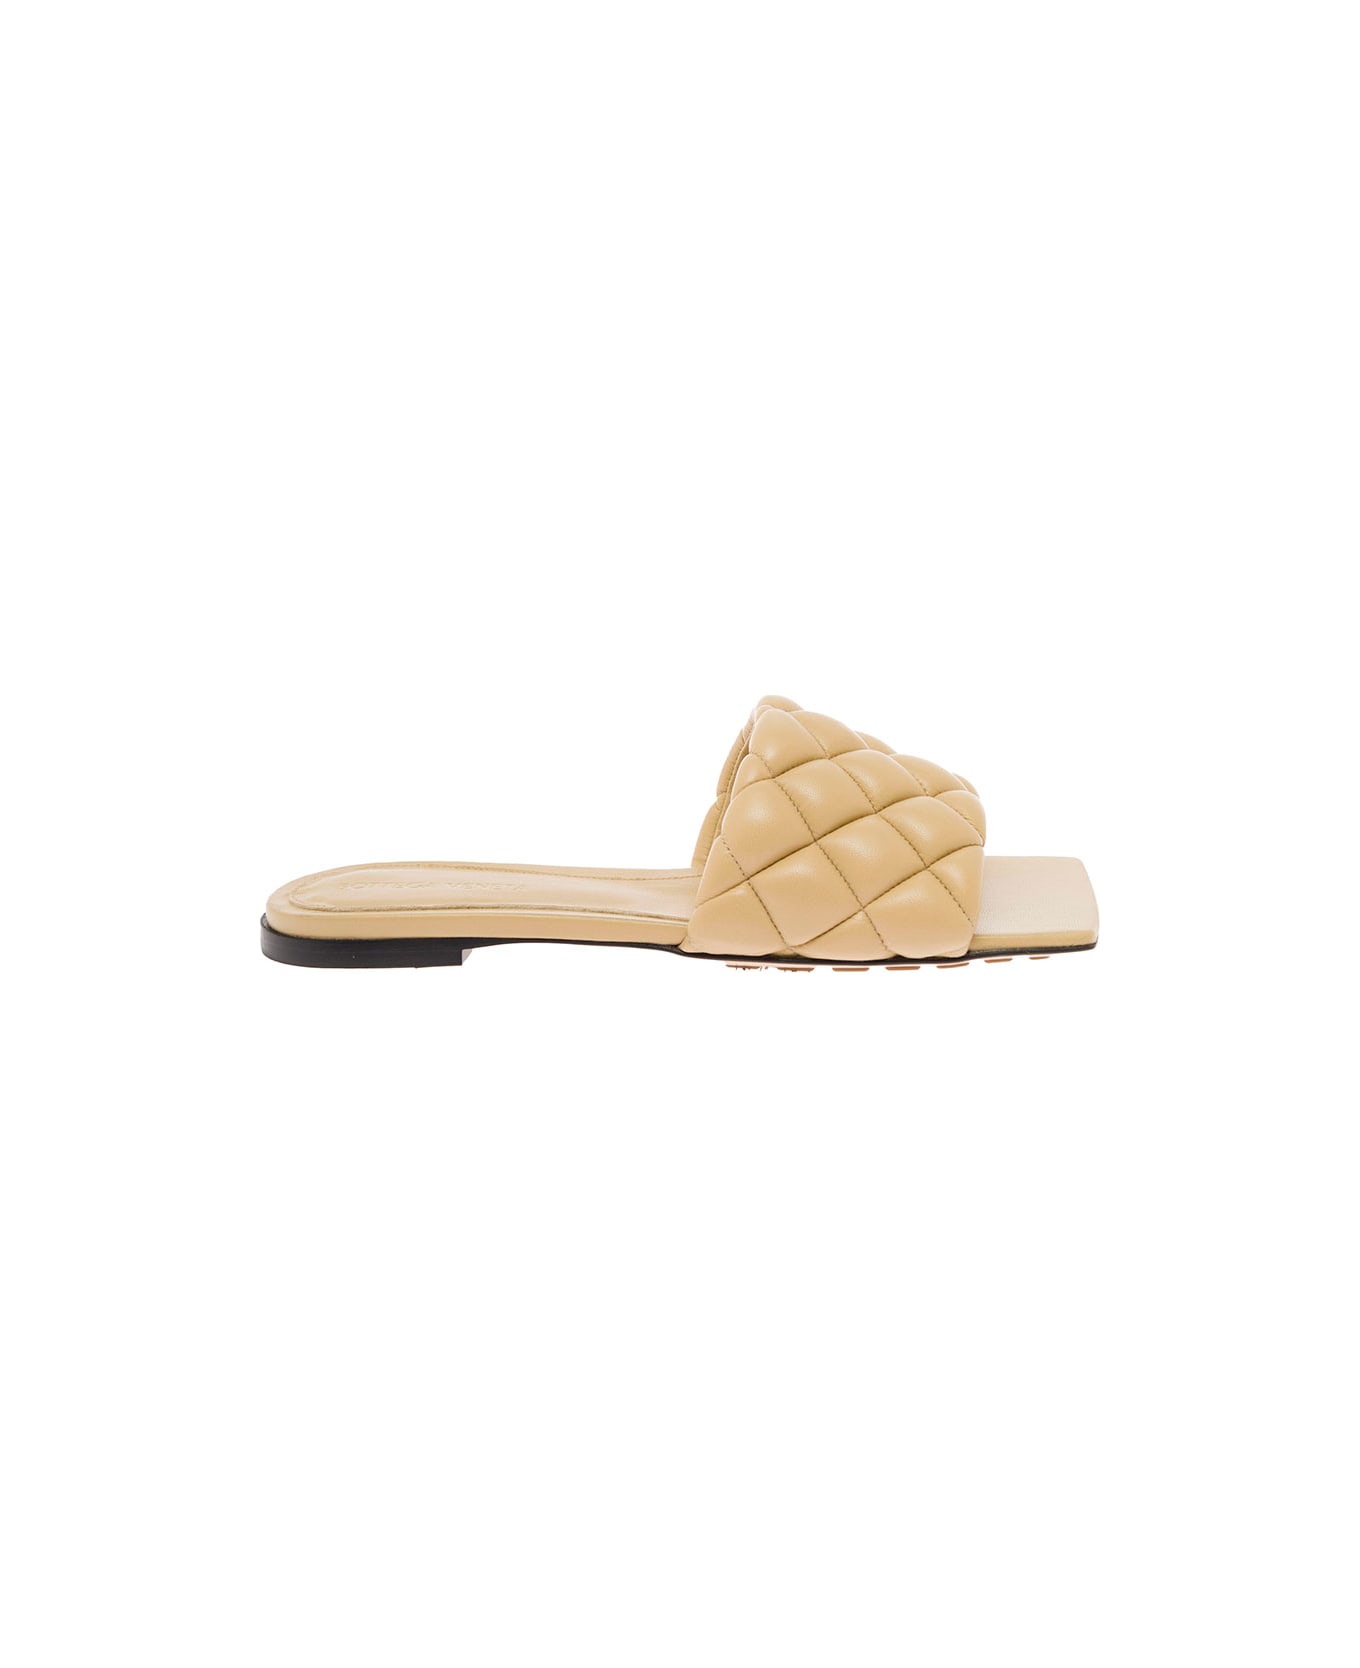 Bottega Veneta Beige Quilted Leather Slide Sandals Bottega Veneta Woman - Beige